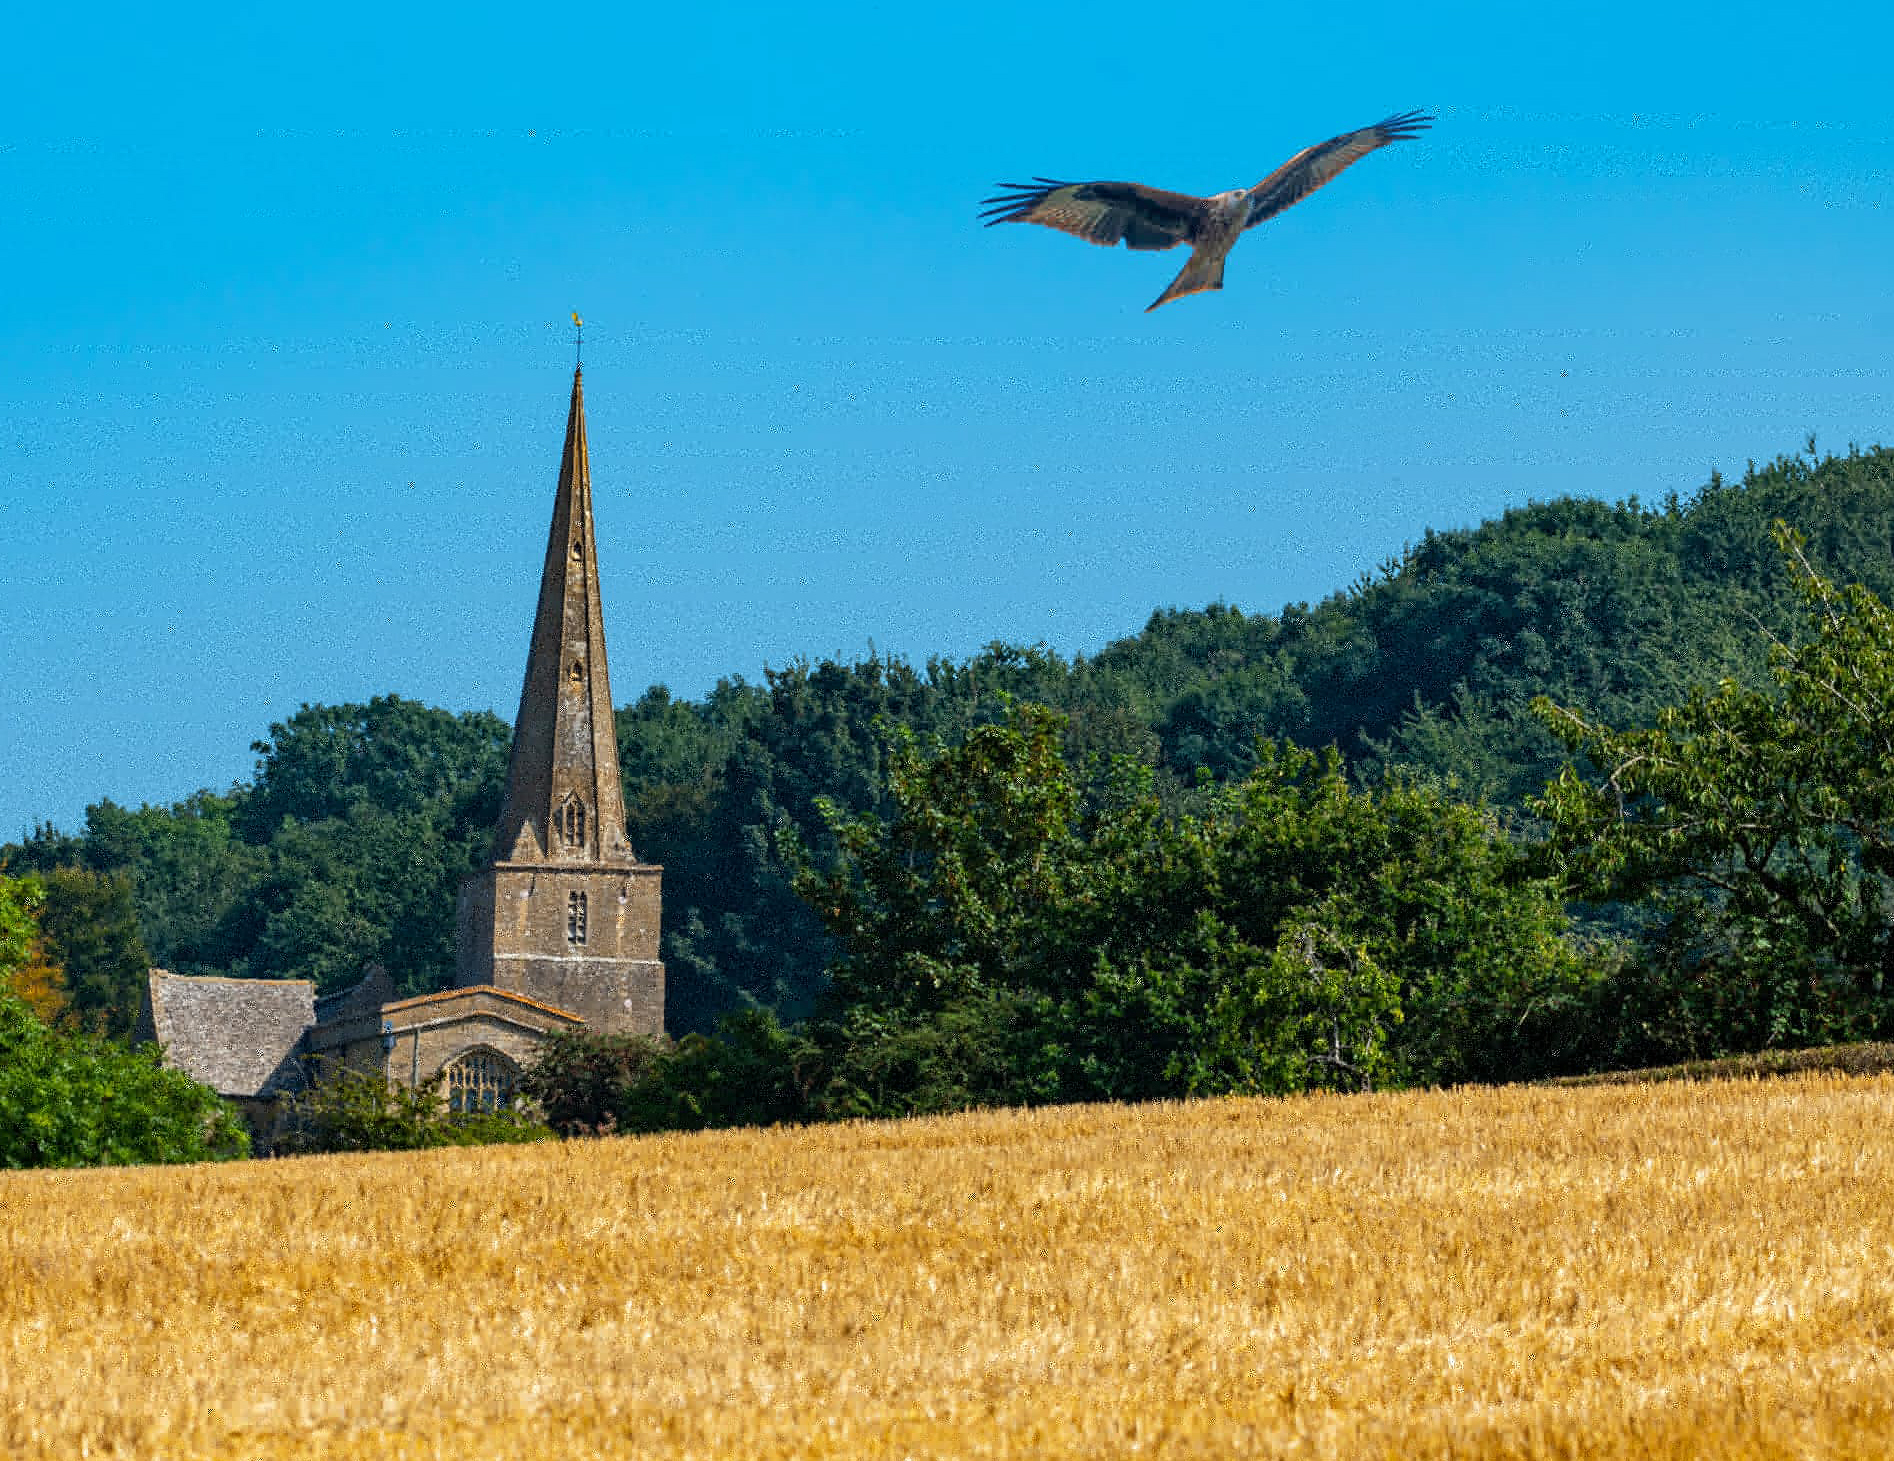 Kite over Saintbury Church